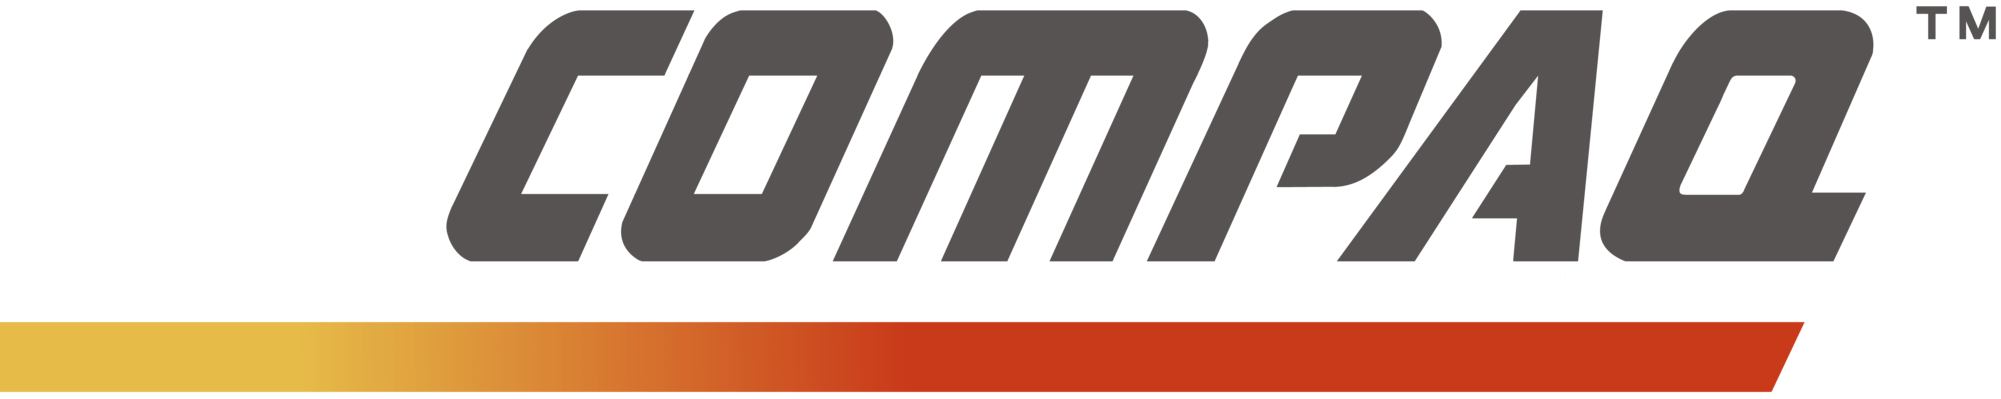 Compaq Logo - Compaq Logos